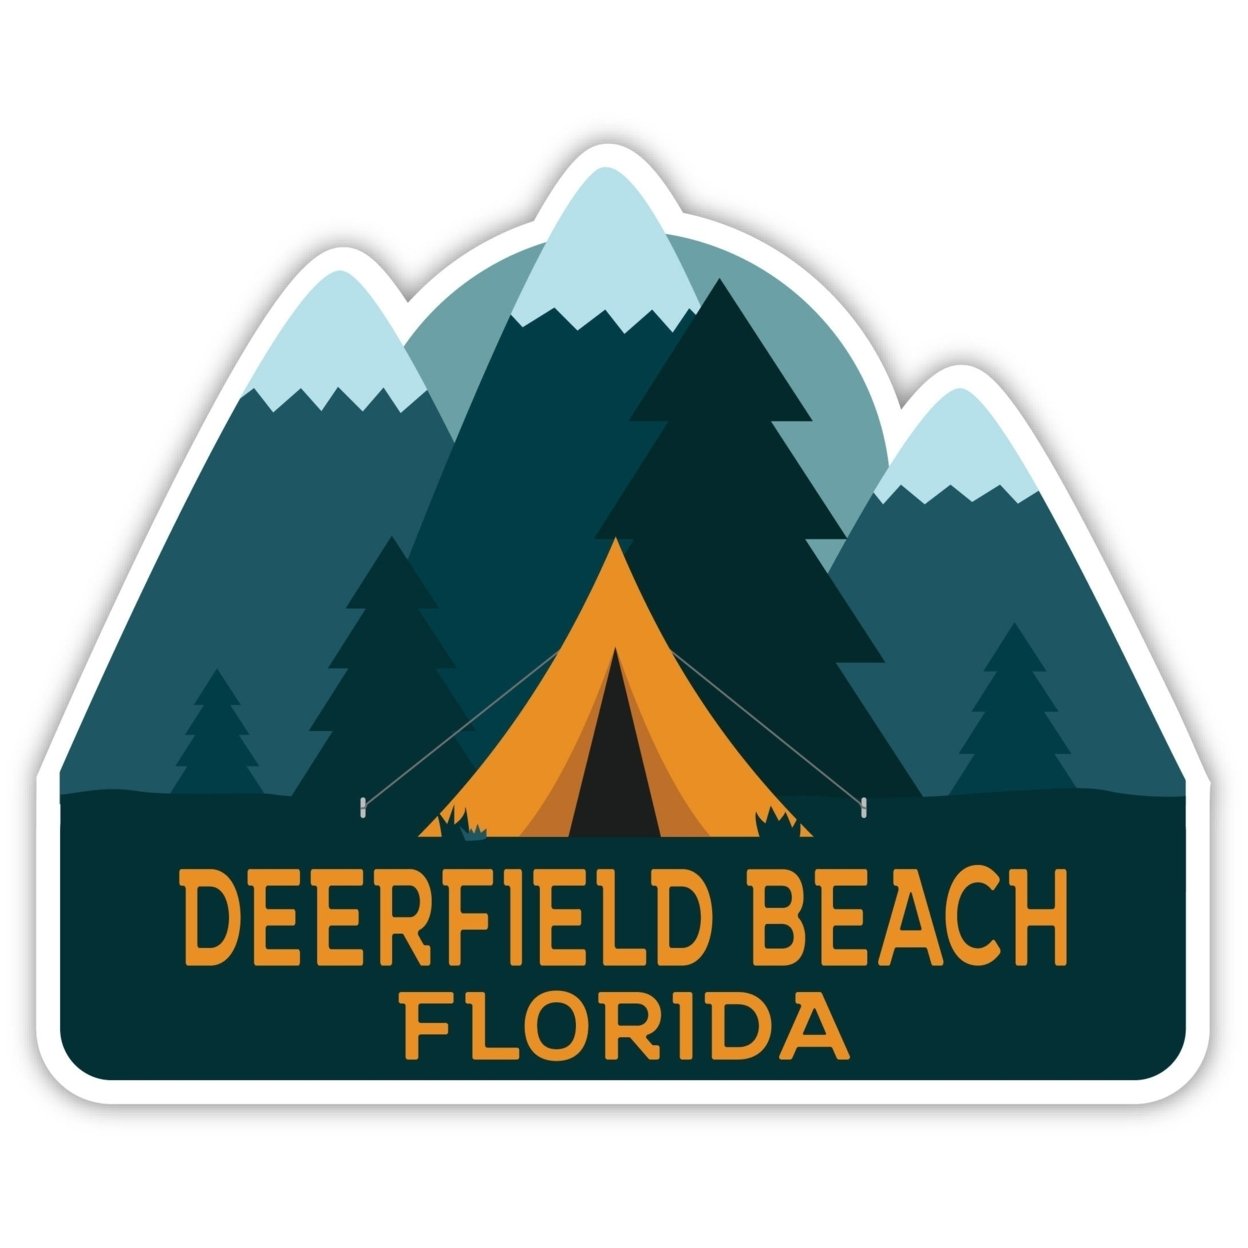 Deerfield Beach Florida Souvenir Decorative Stickers (Choose Theme And Size) - Single Unit, 10-Inch, Tent